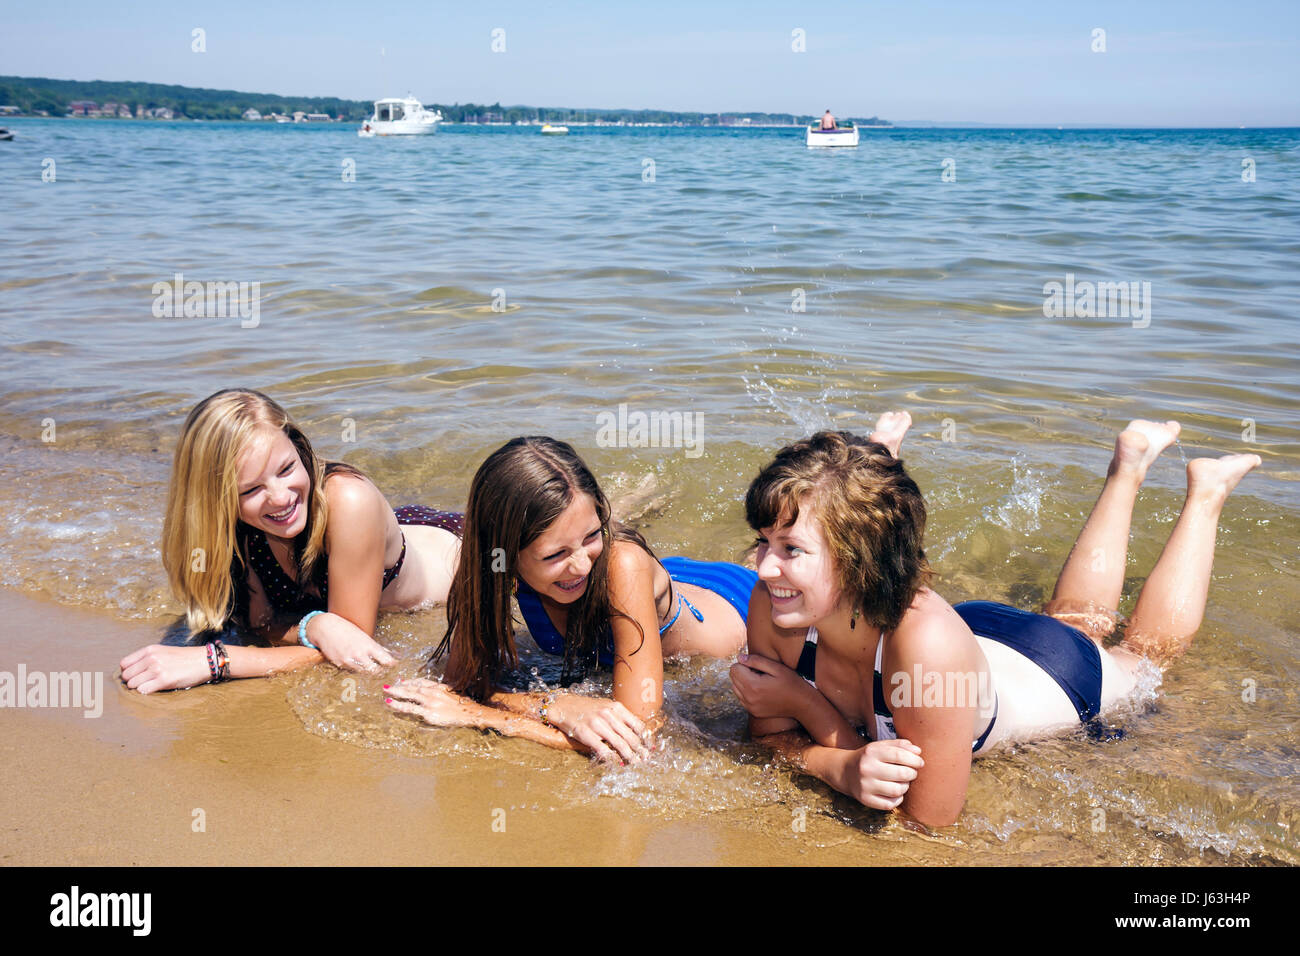 Michigan Traverse City,West Arm Grand Traverse Bay,Clinch Park,three girls,teen,teens,bikini,soak,immerse,water,public,beach,fun,wateractivity,friends Stock Photo